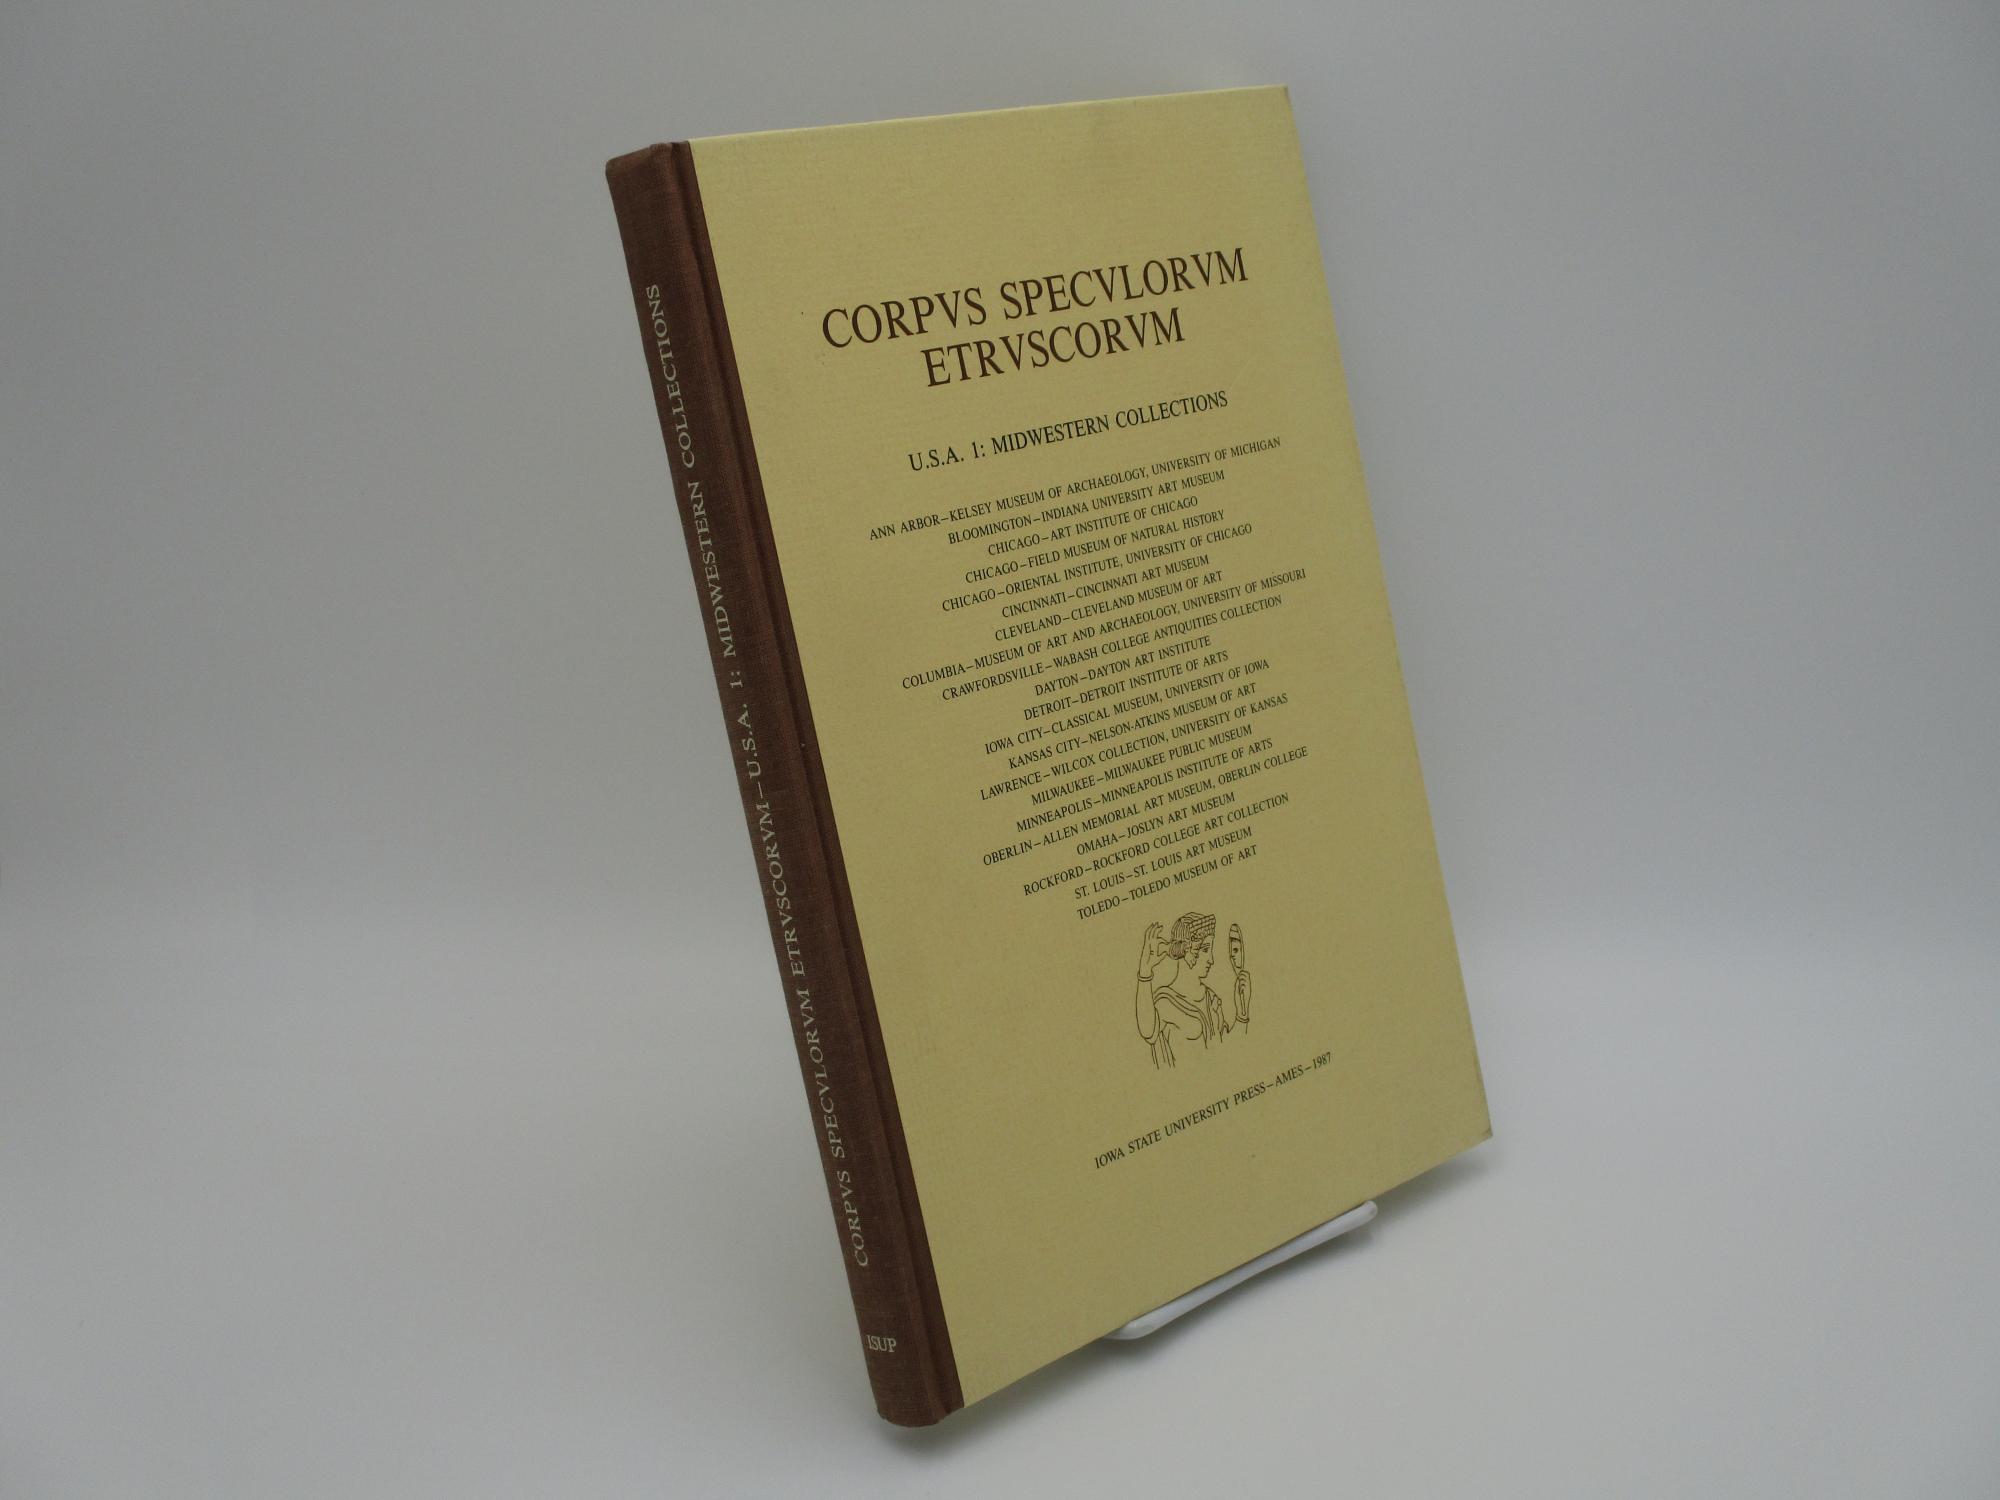 Corpus Specvlorum Etruscorum; U.S.A. 1: Midwestern Collections. - de Puma, Richard Daniel (text and drawings).